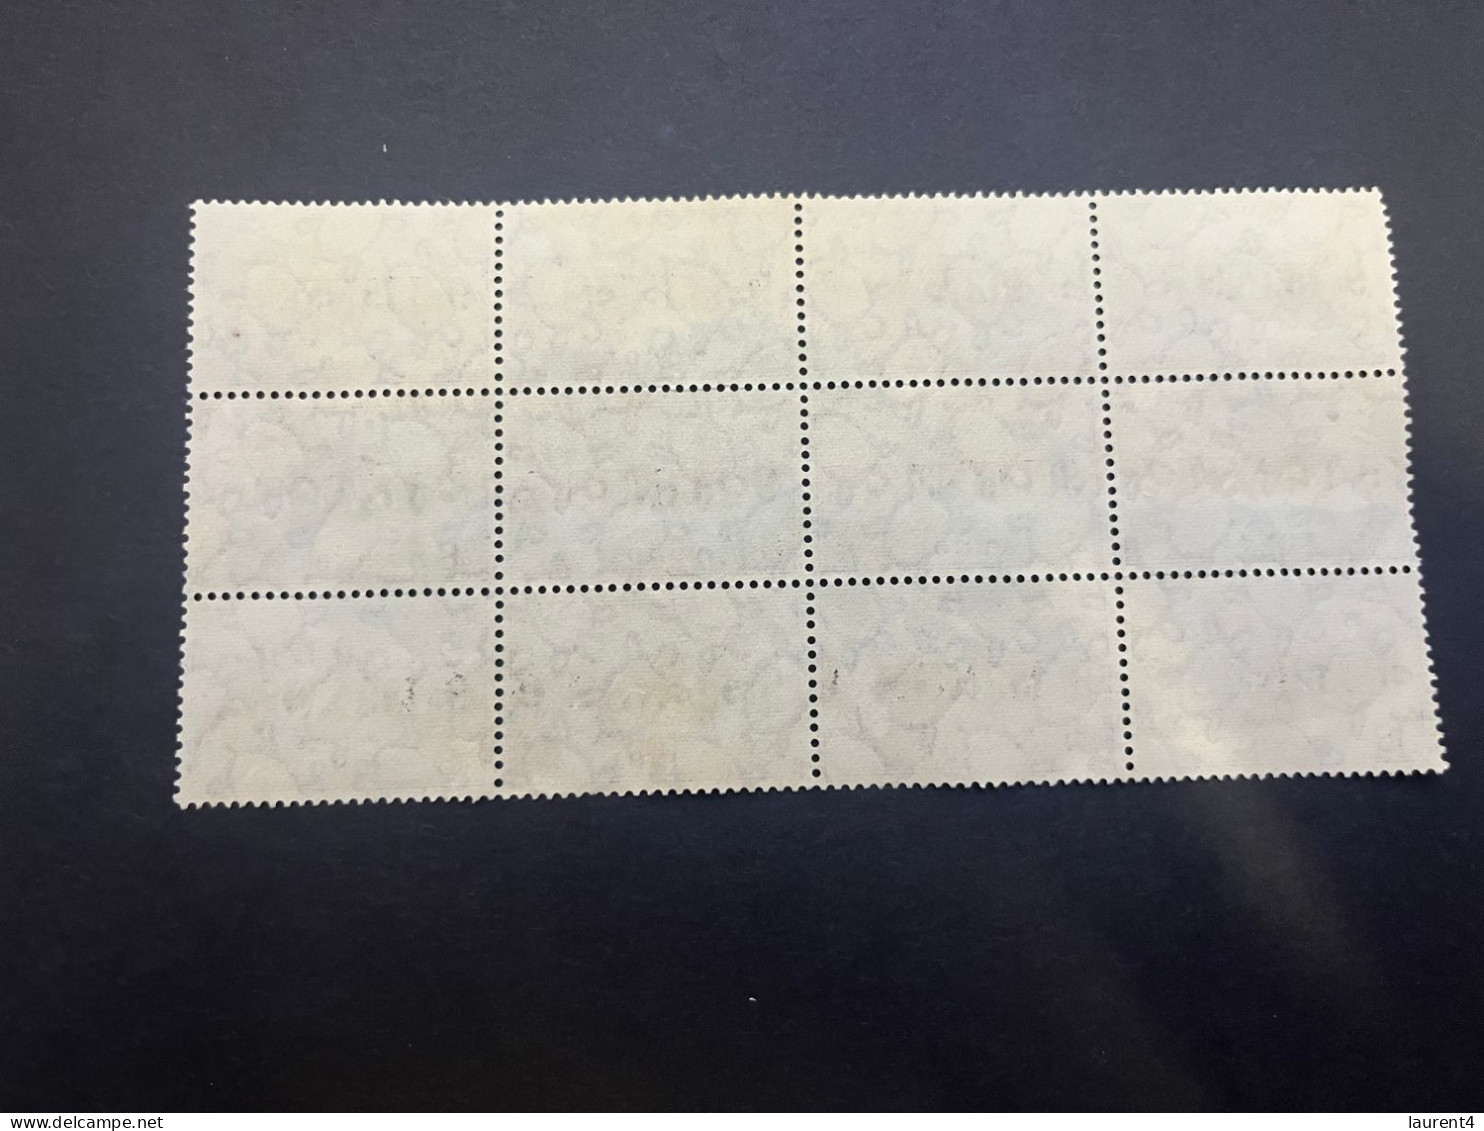 16-5-2024 (stamp) TONGA Block Of 12 Stamps  - USED - Overprinted - Tonga (1970-...)